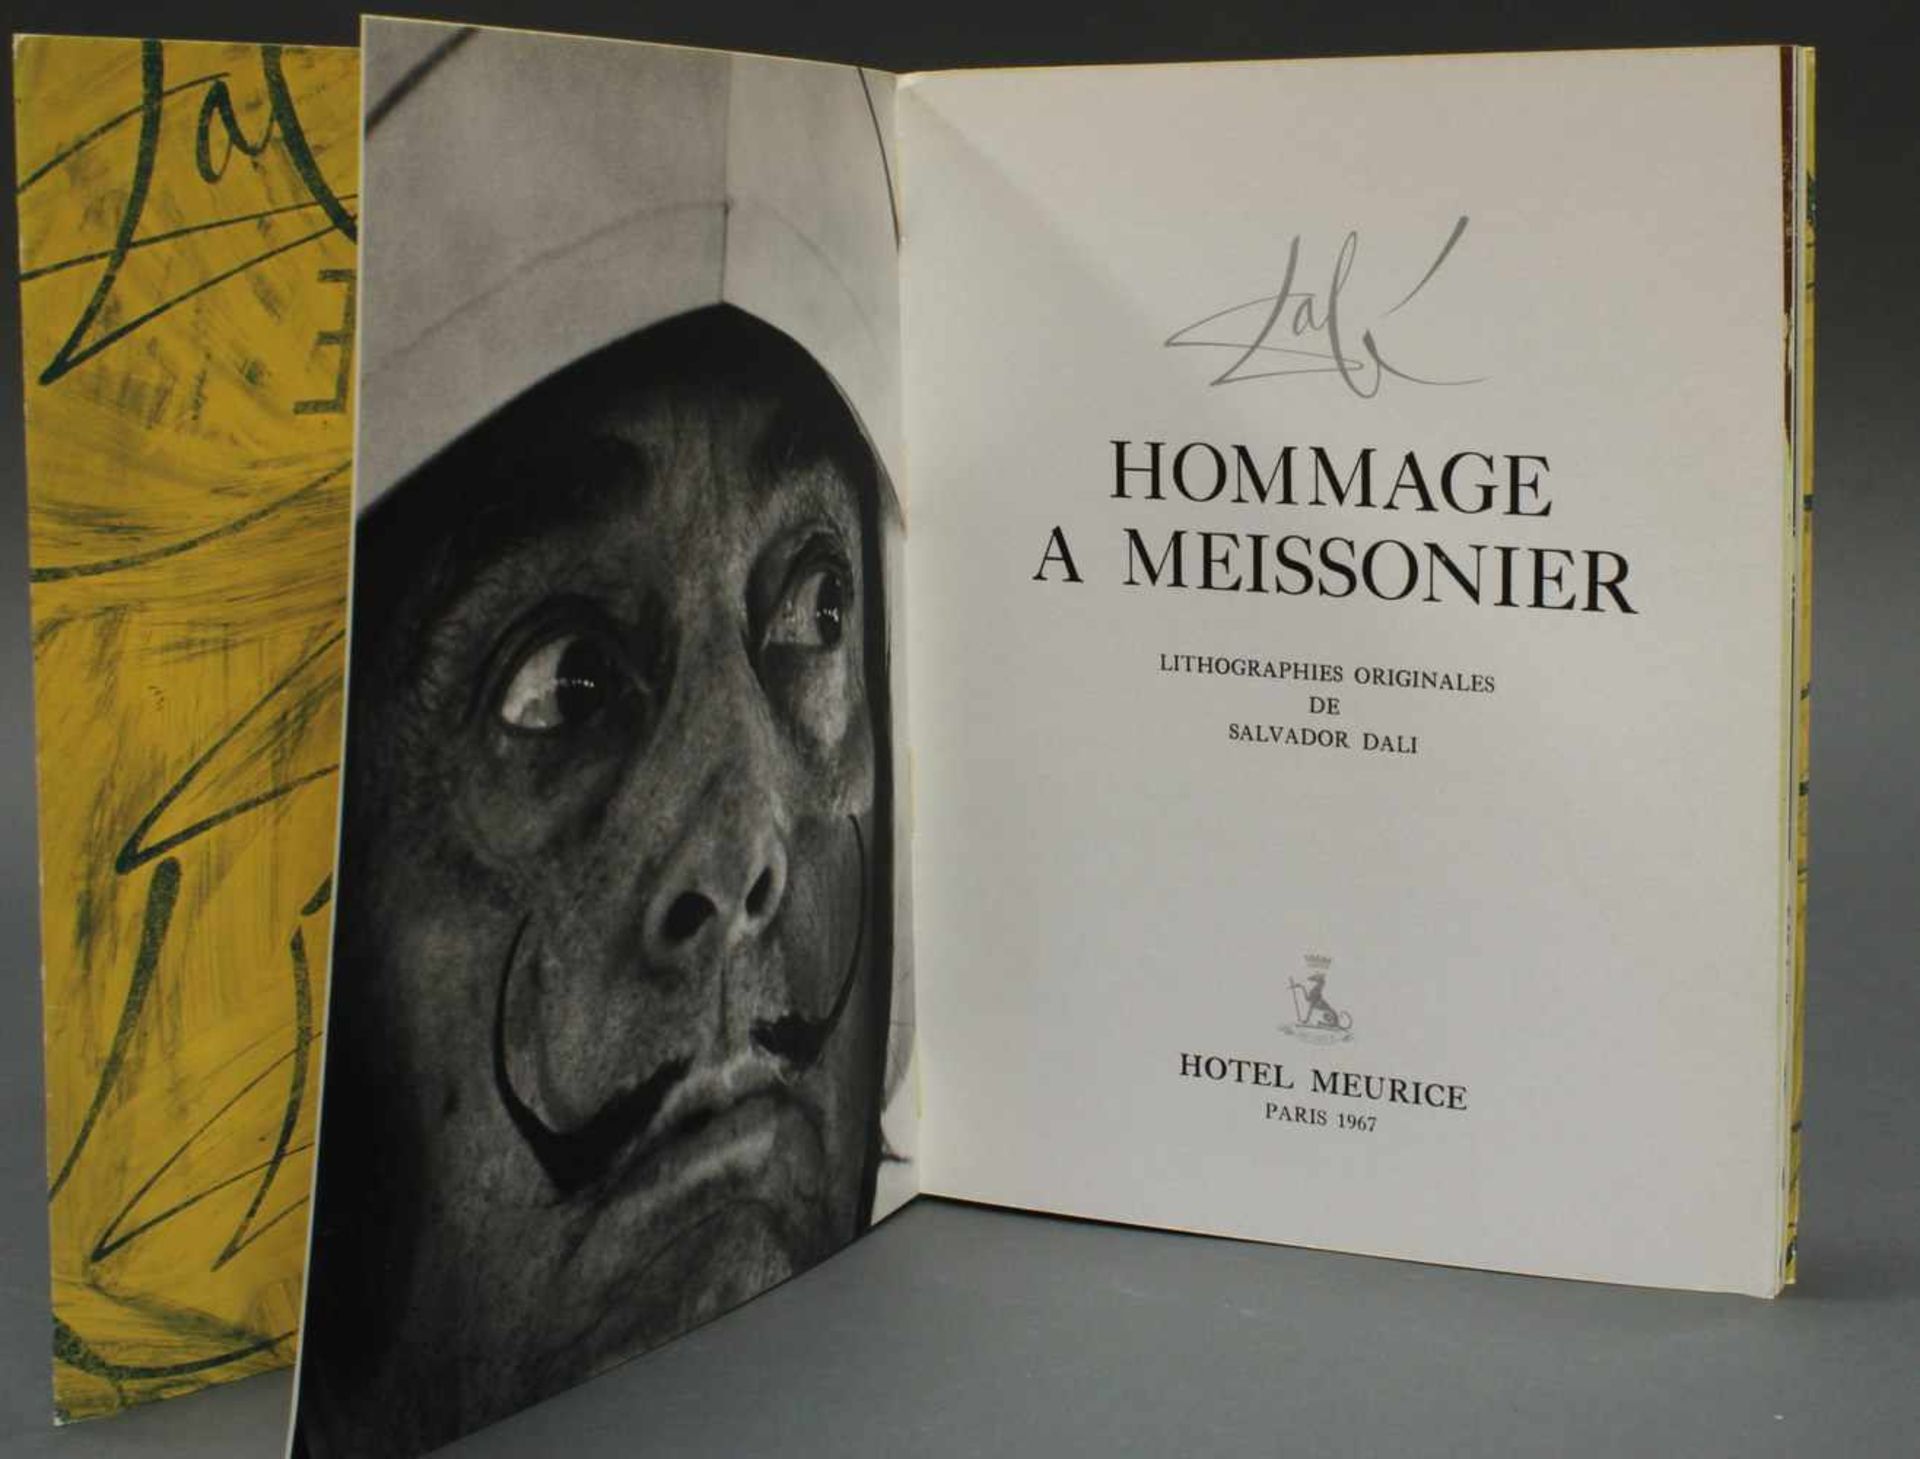 Salvador Dali, "Hommage à Meissonier", mit vier Originallithografien, Paris 1967